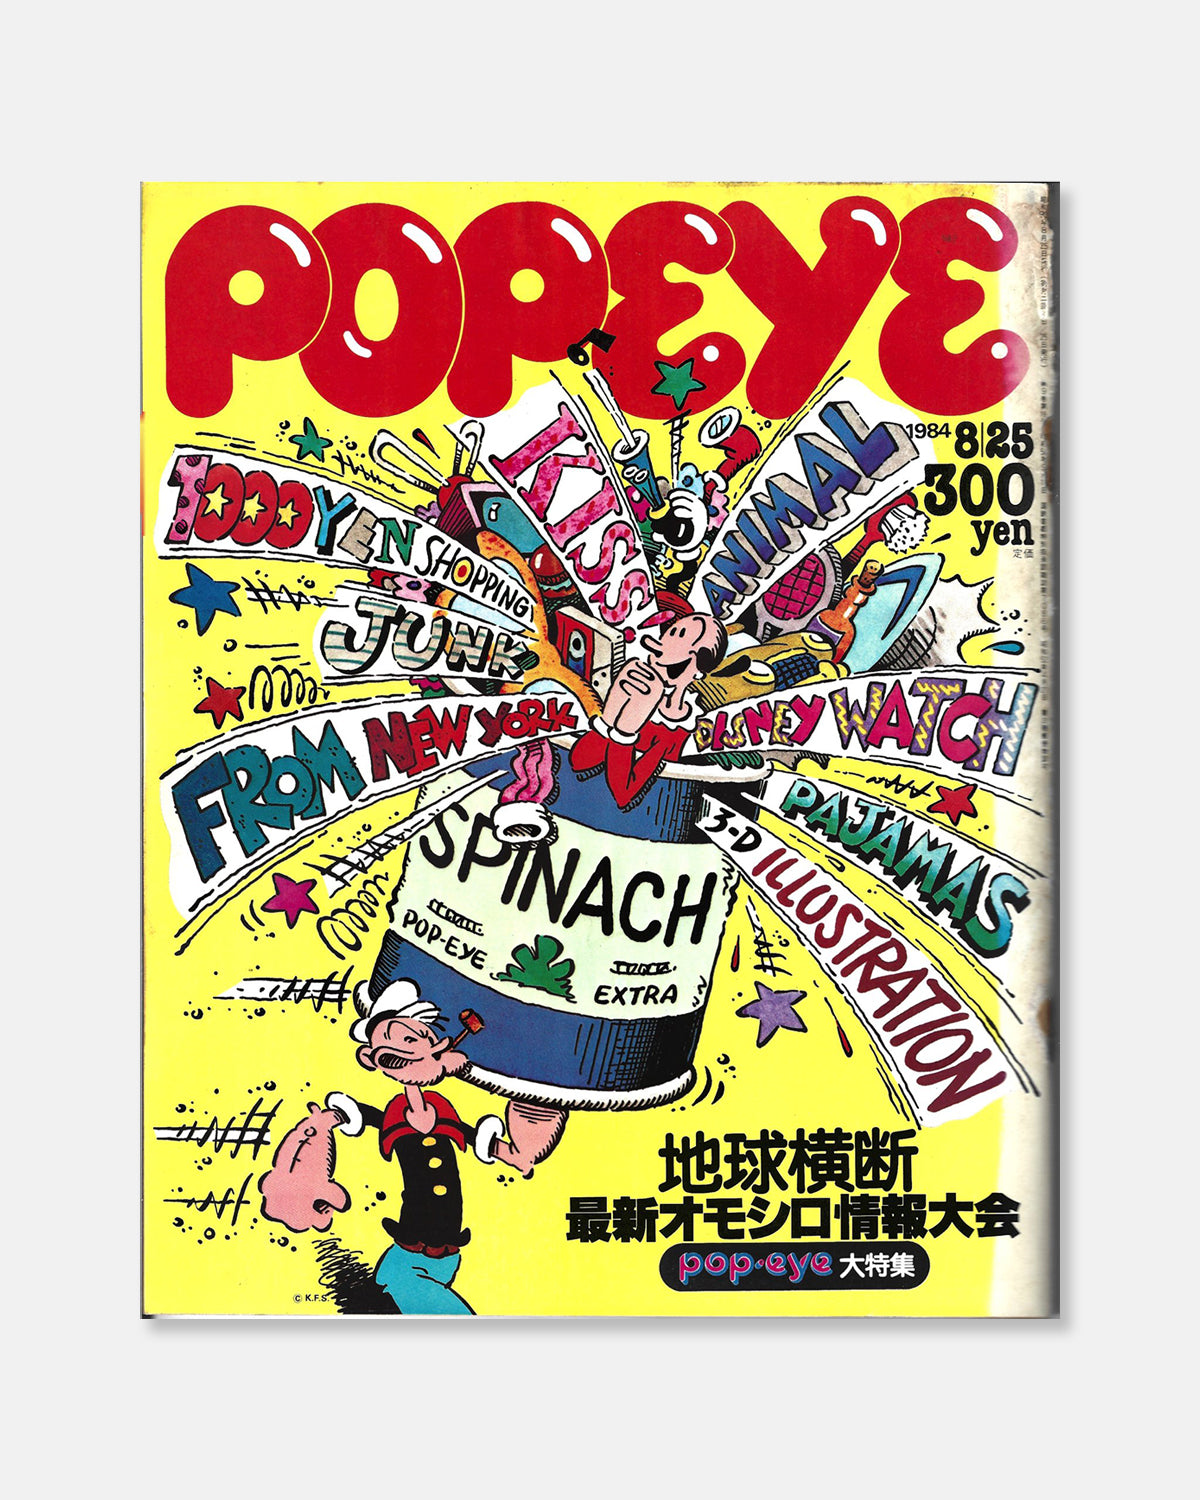 Popeye Magazine August 1984 (#181)